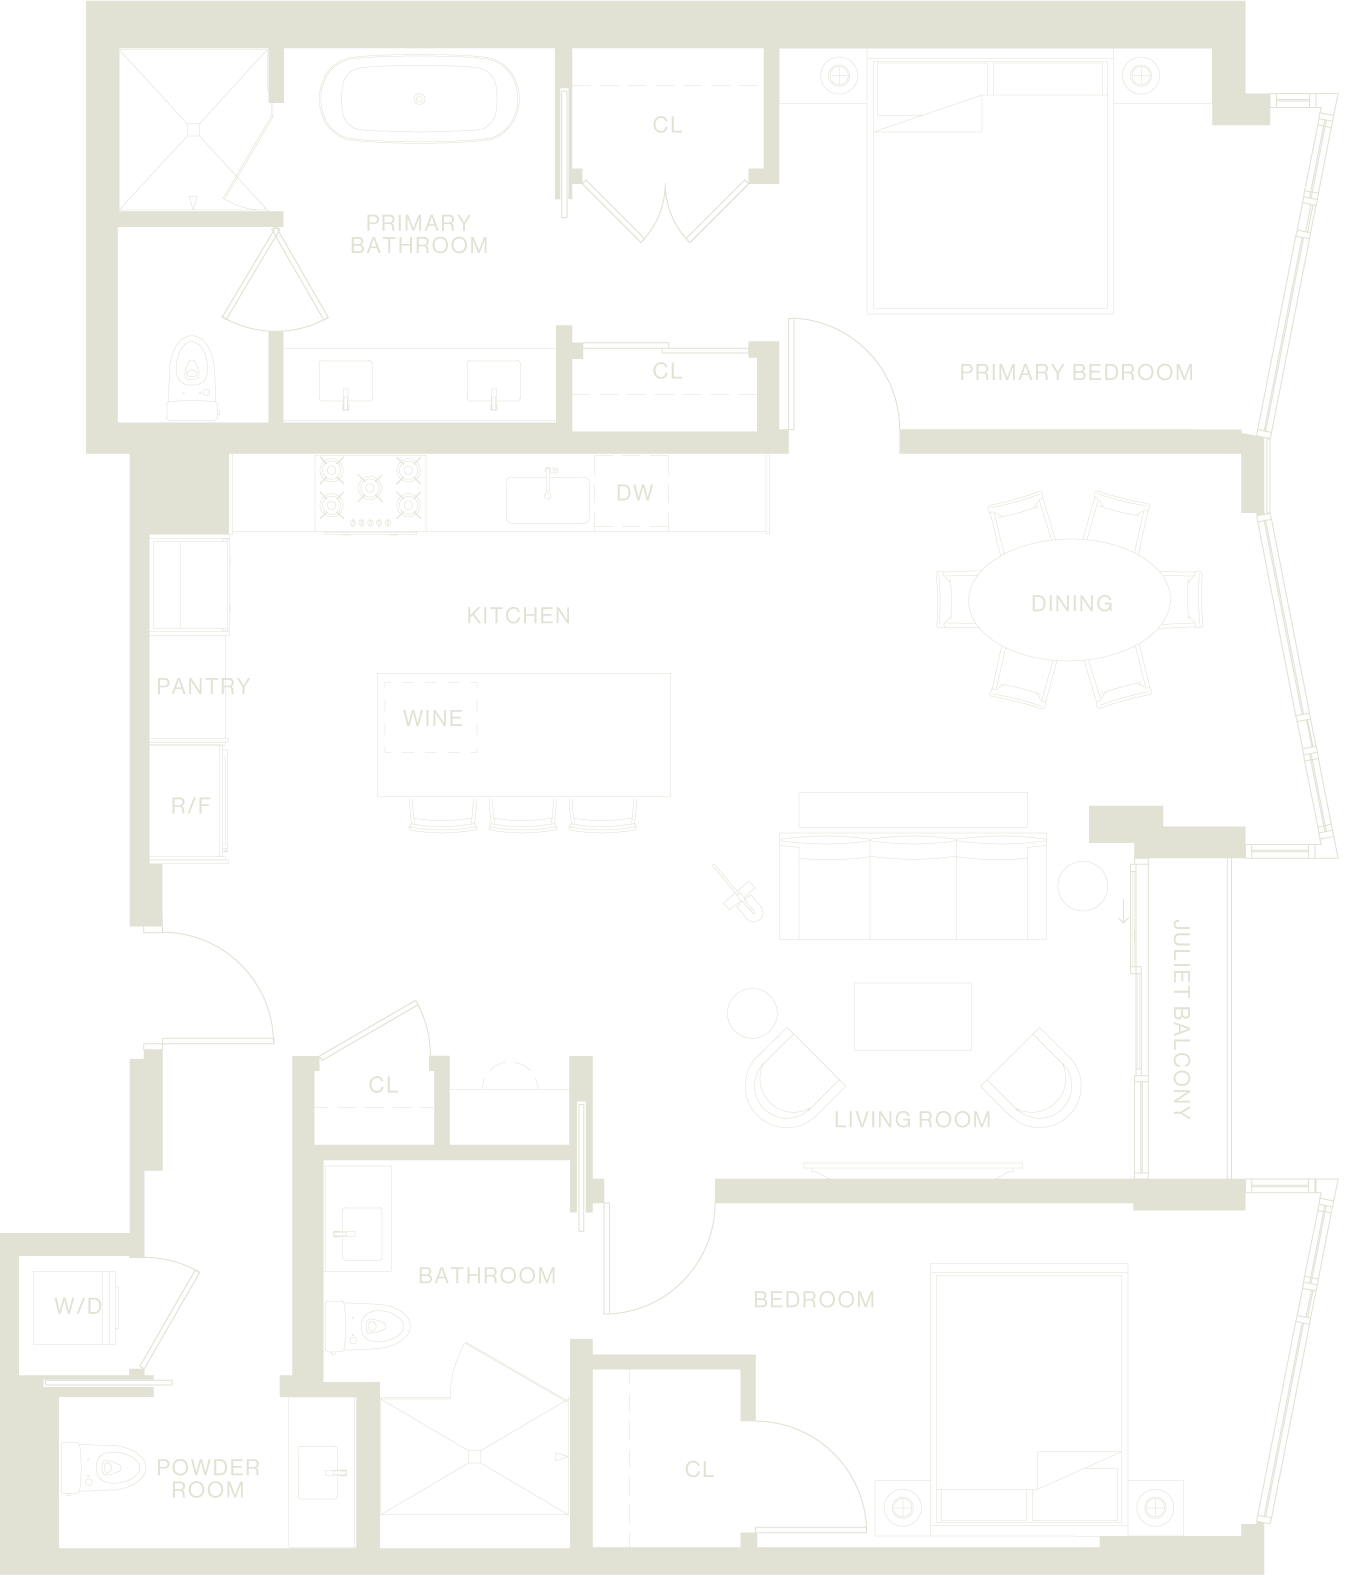 Floor plan for unit 405